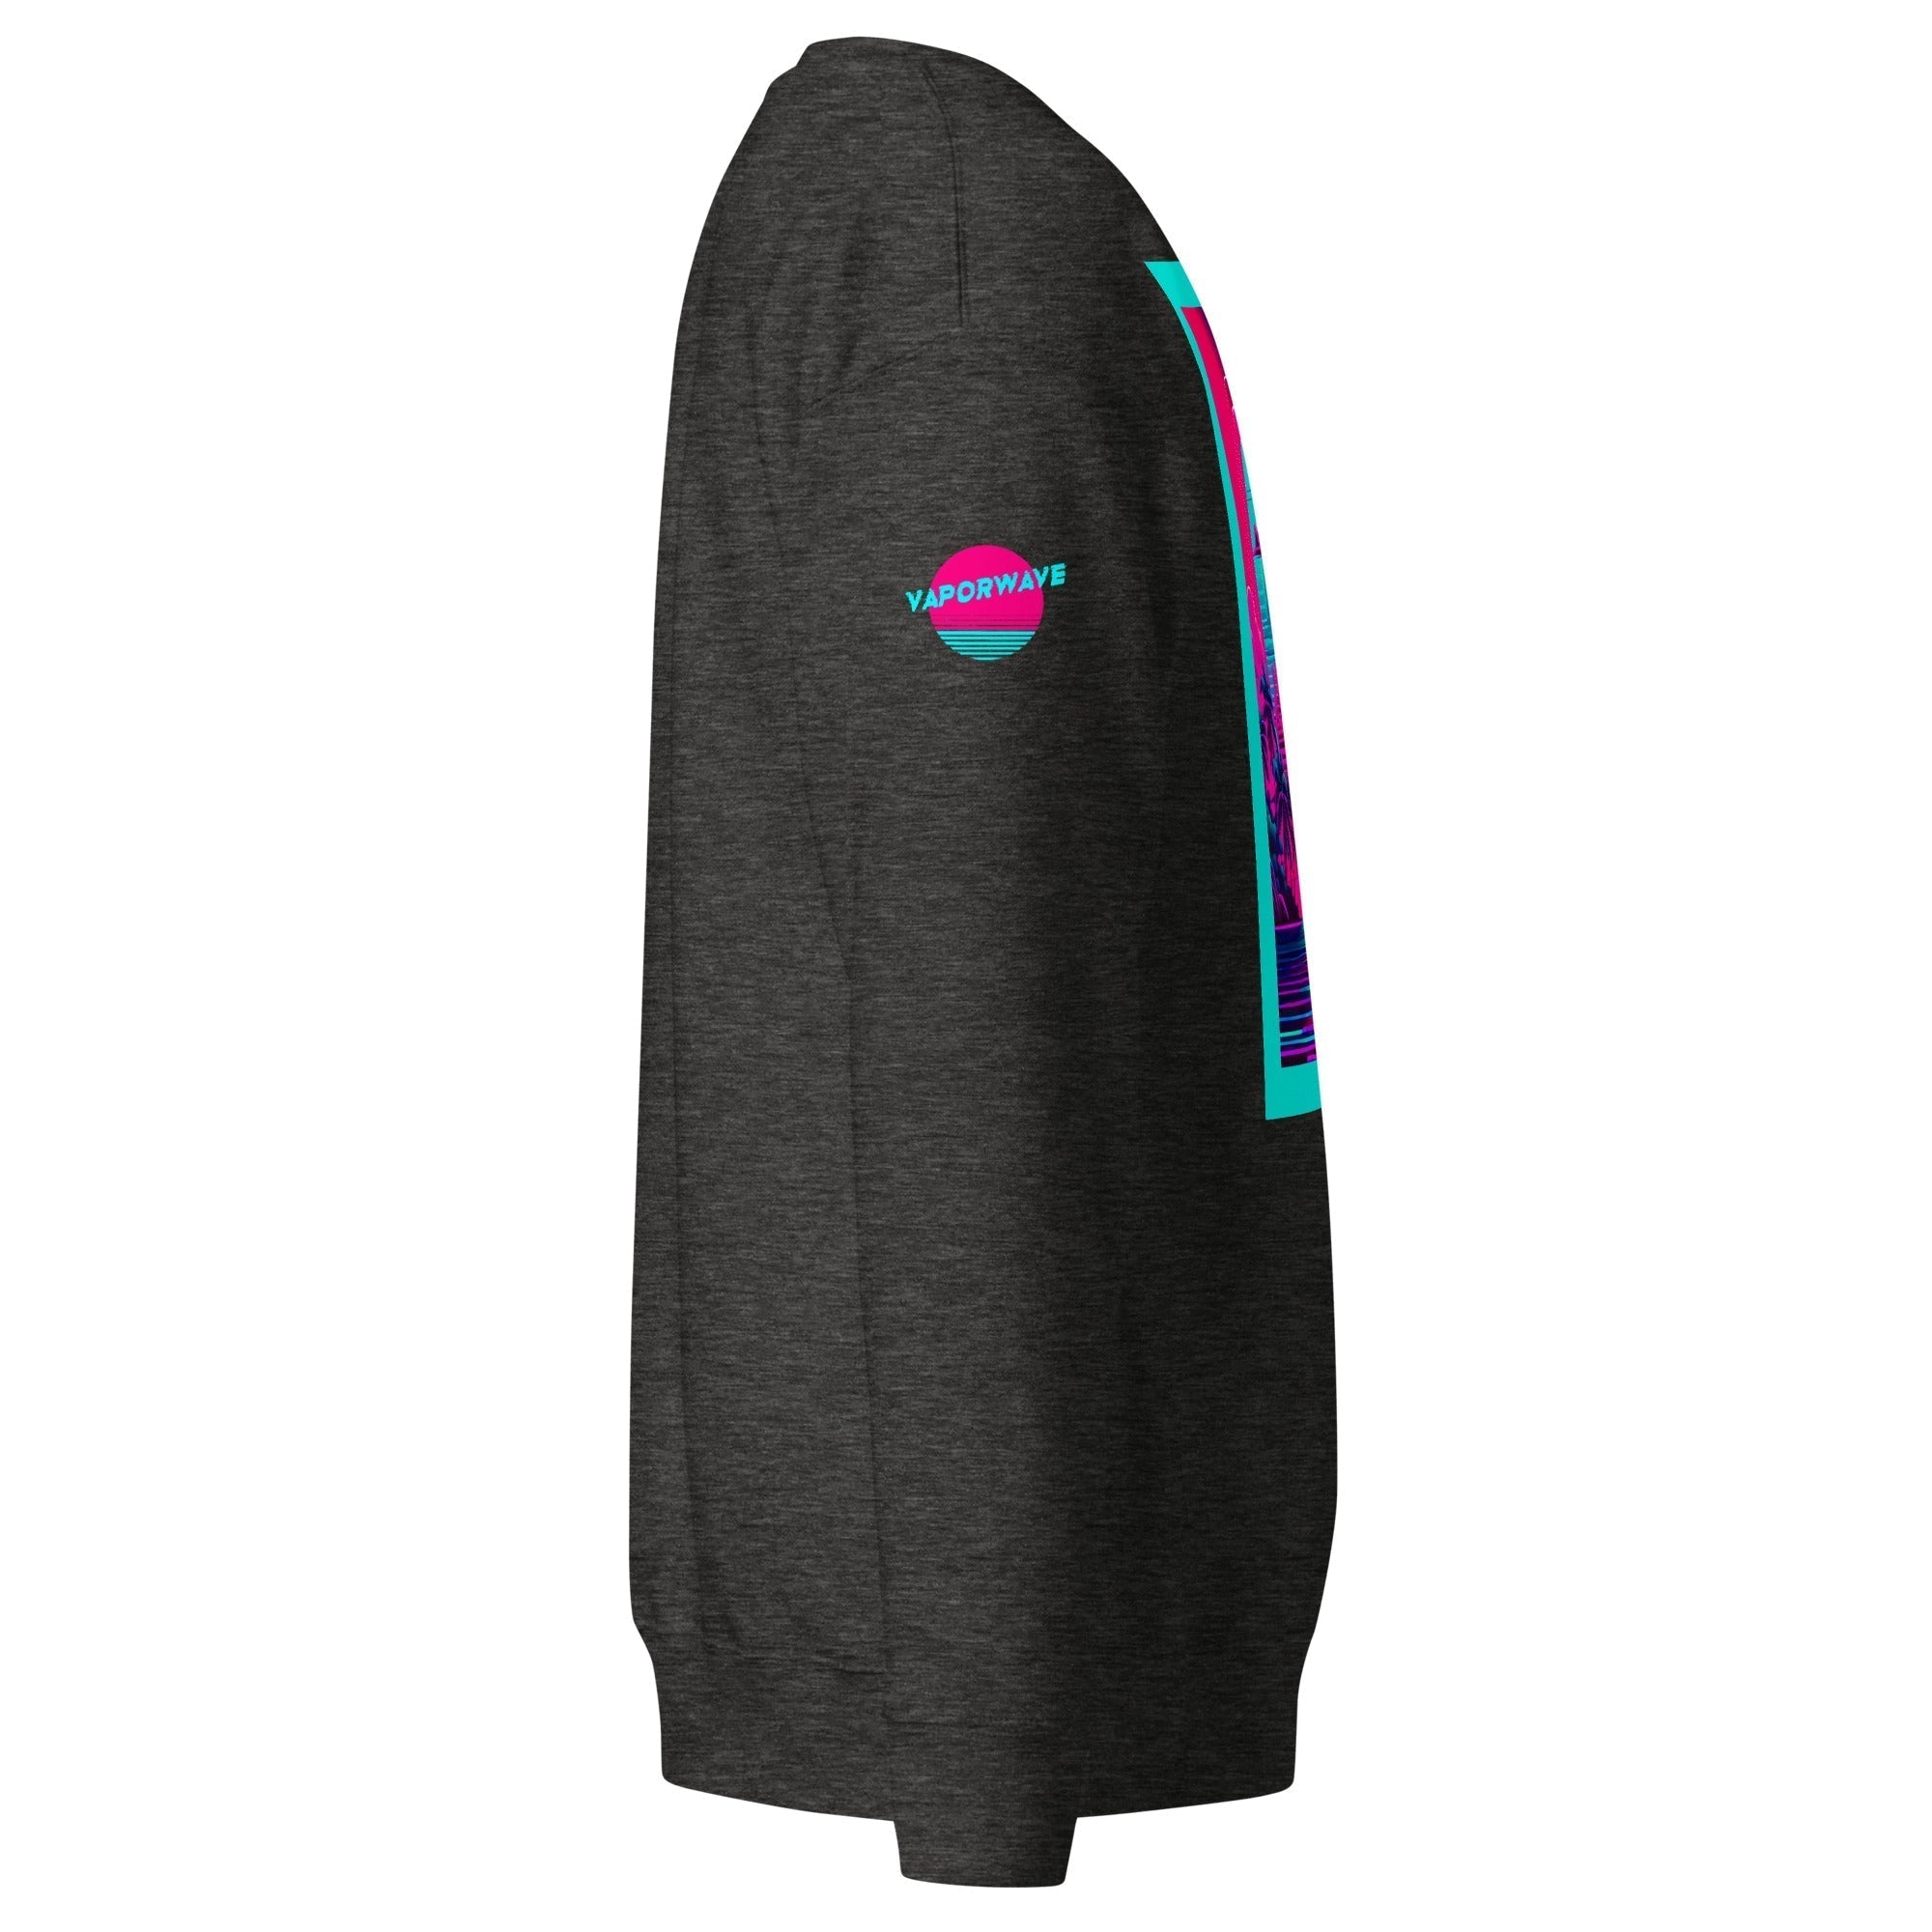 Unisex Premium Sweatshirt - Vaporwave Series v.7 - GRAPHIC T-SHIRTS